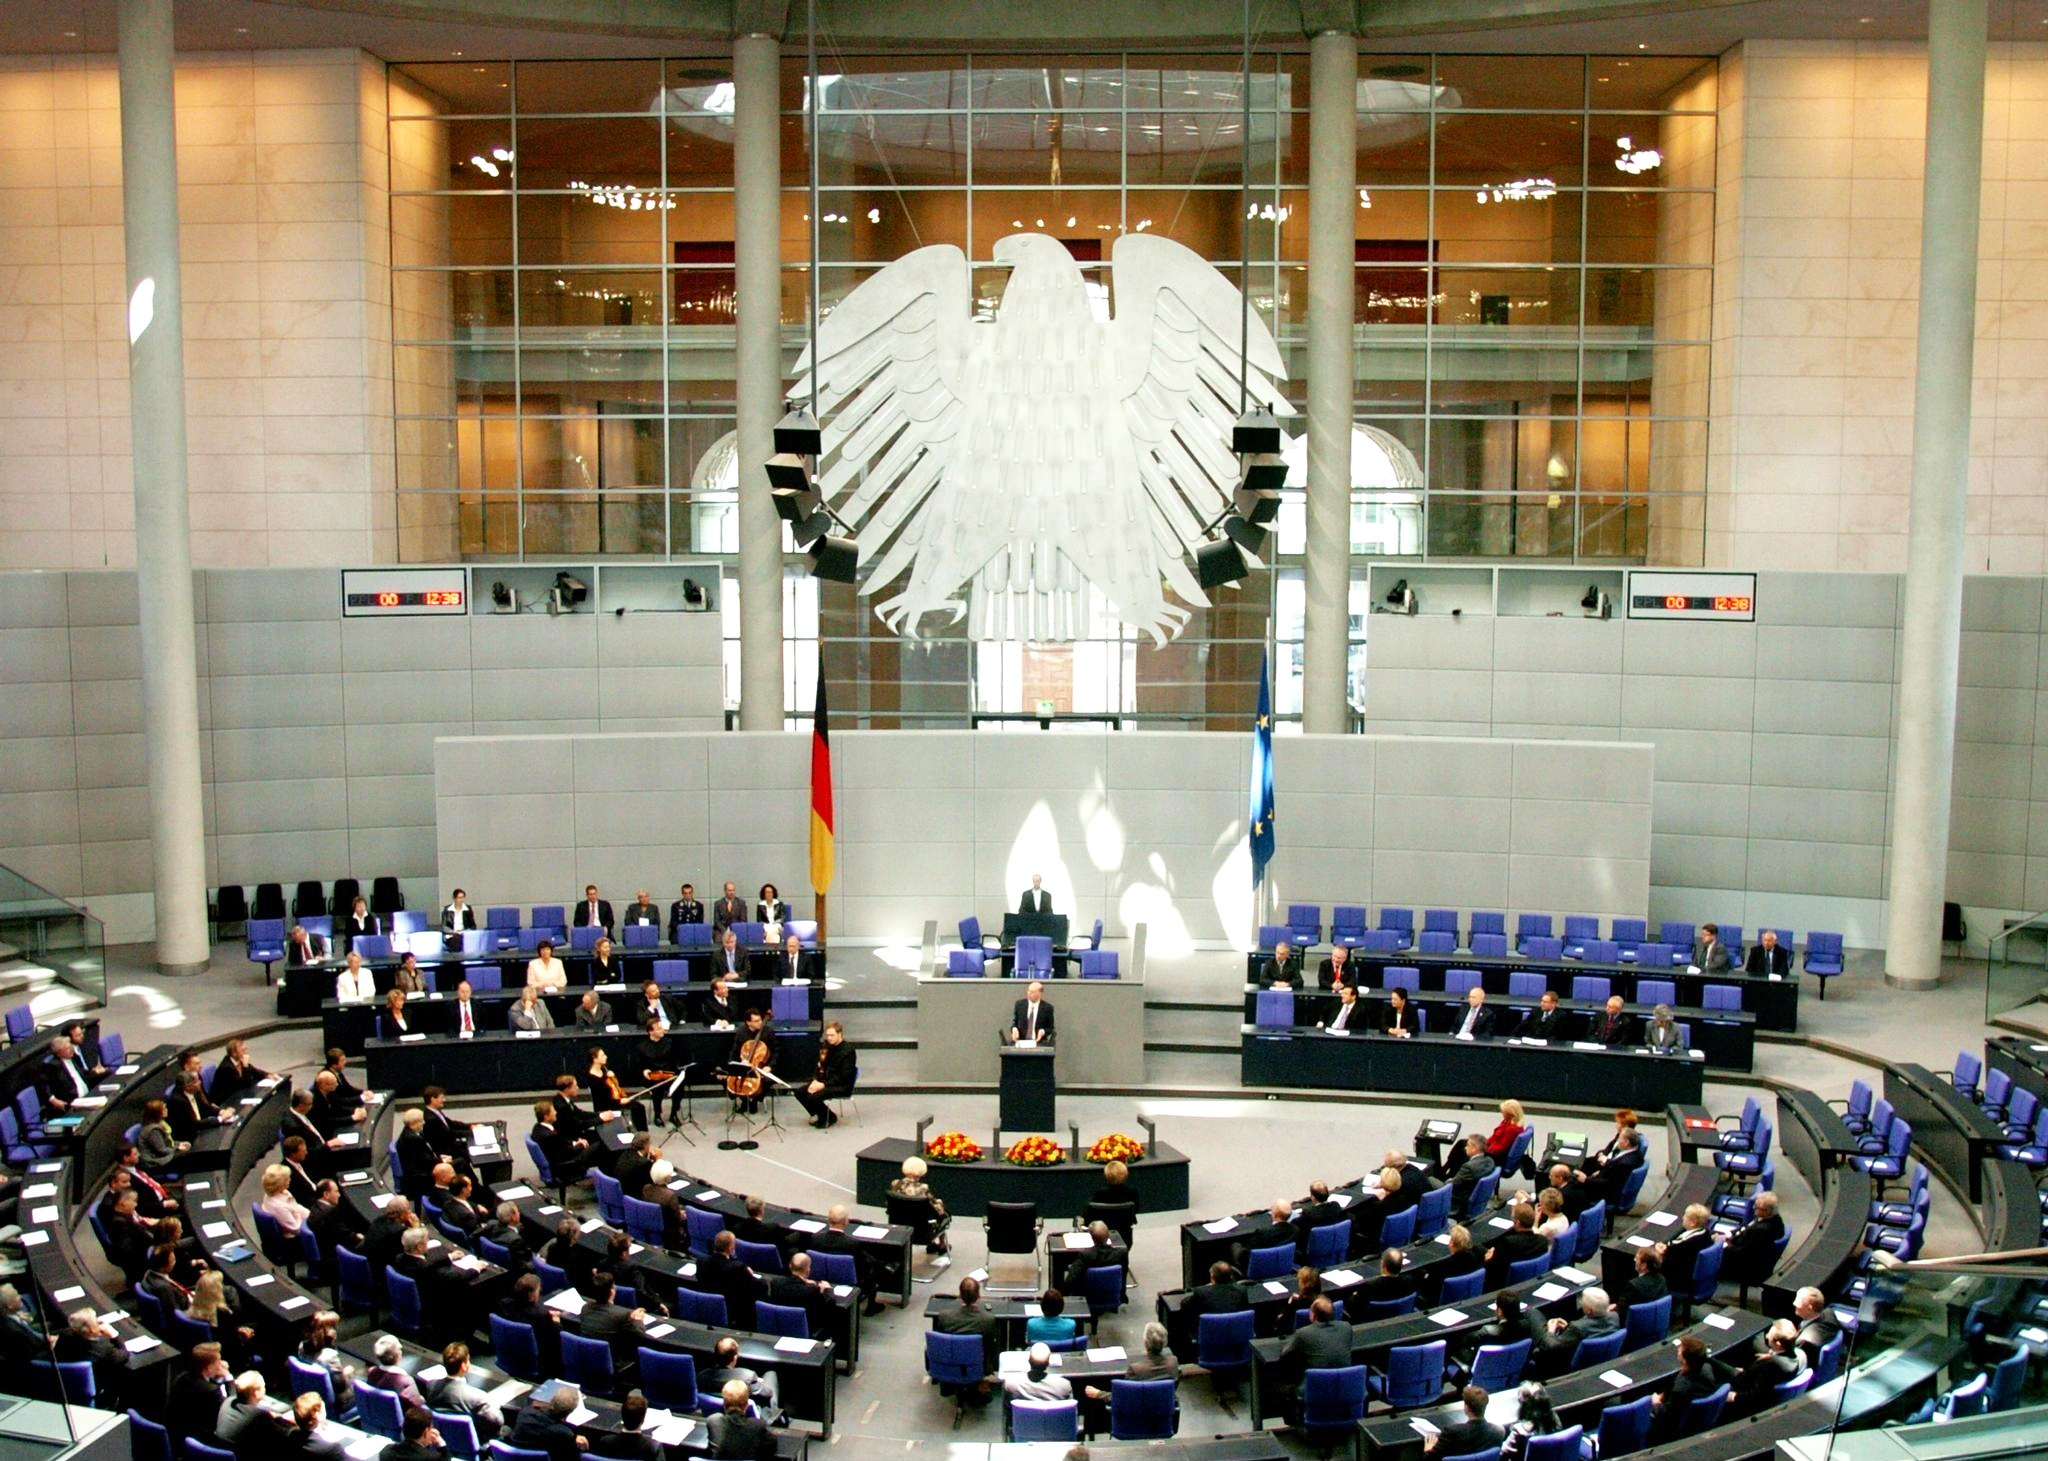 http://bethnahrin.de/wp-content/uploads/2012/04/Deutscher-Bundestag.jpg